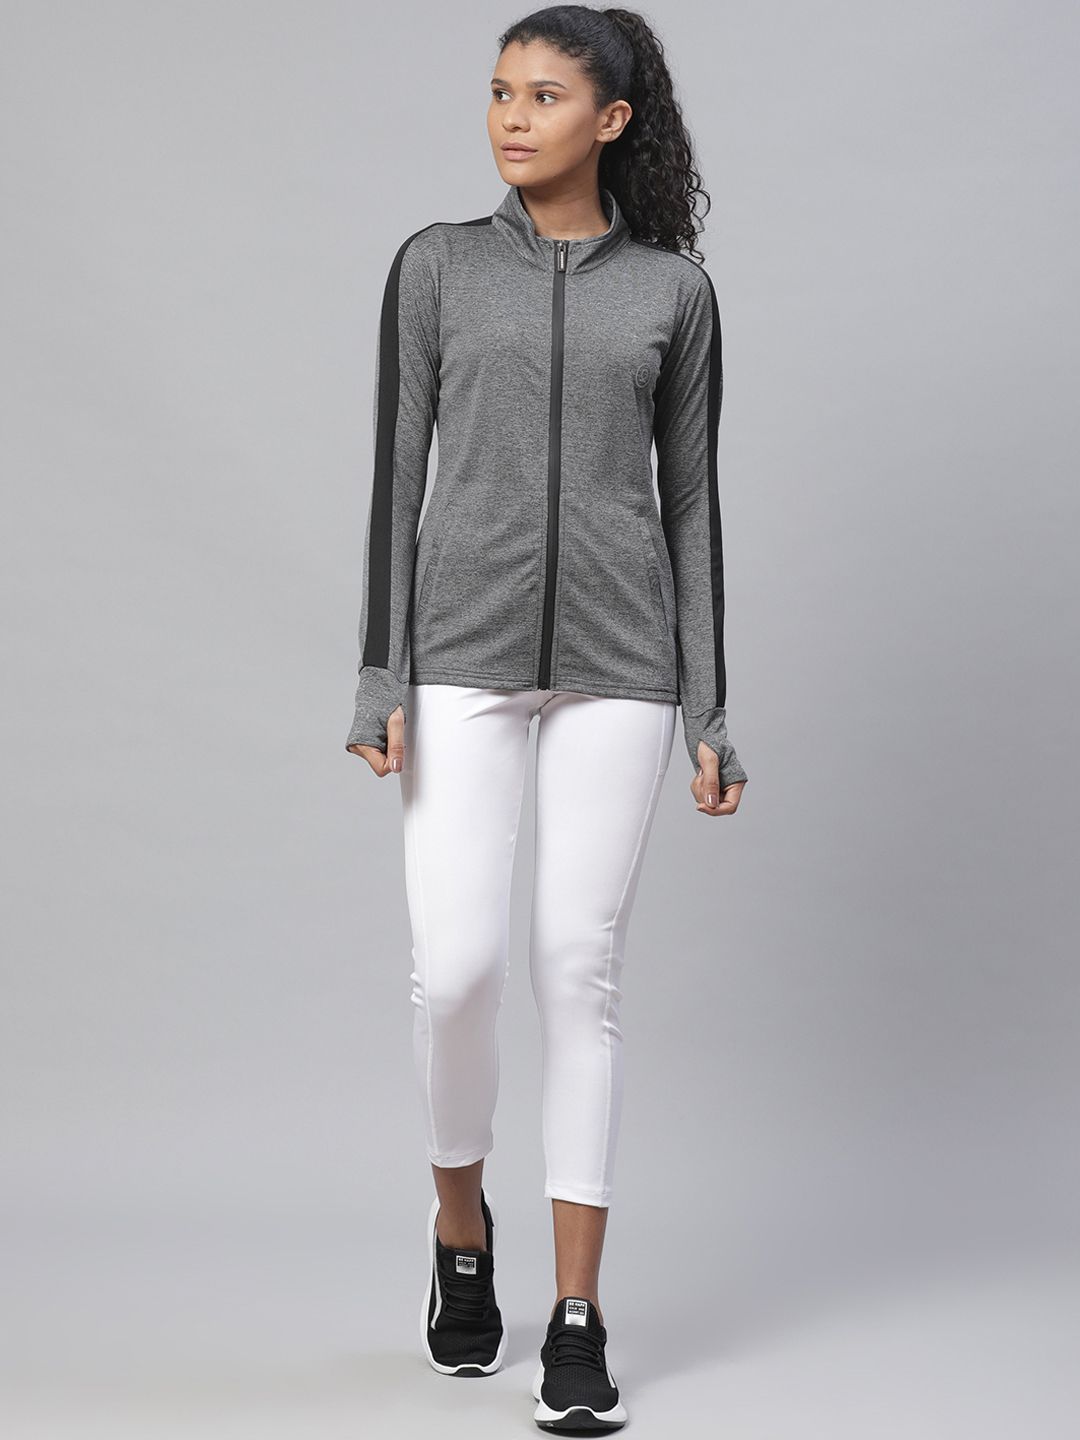 Chkokko Women Grey Melange Solid Sporty Jacket Price in India